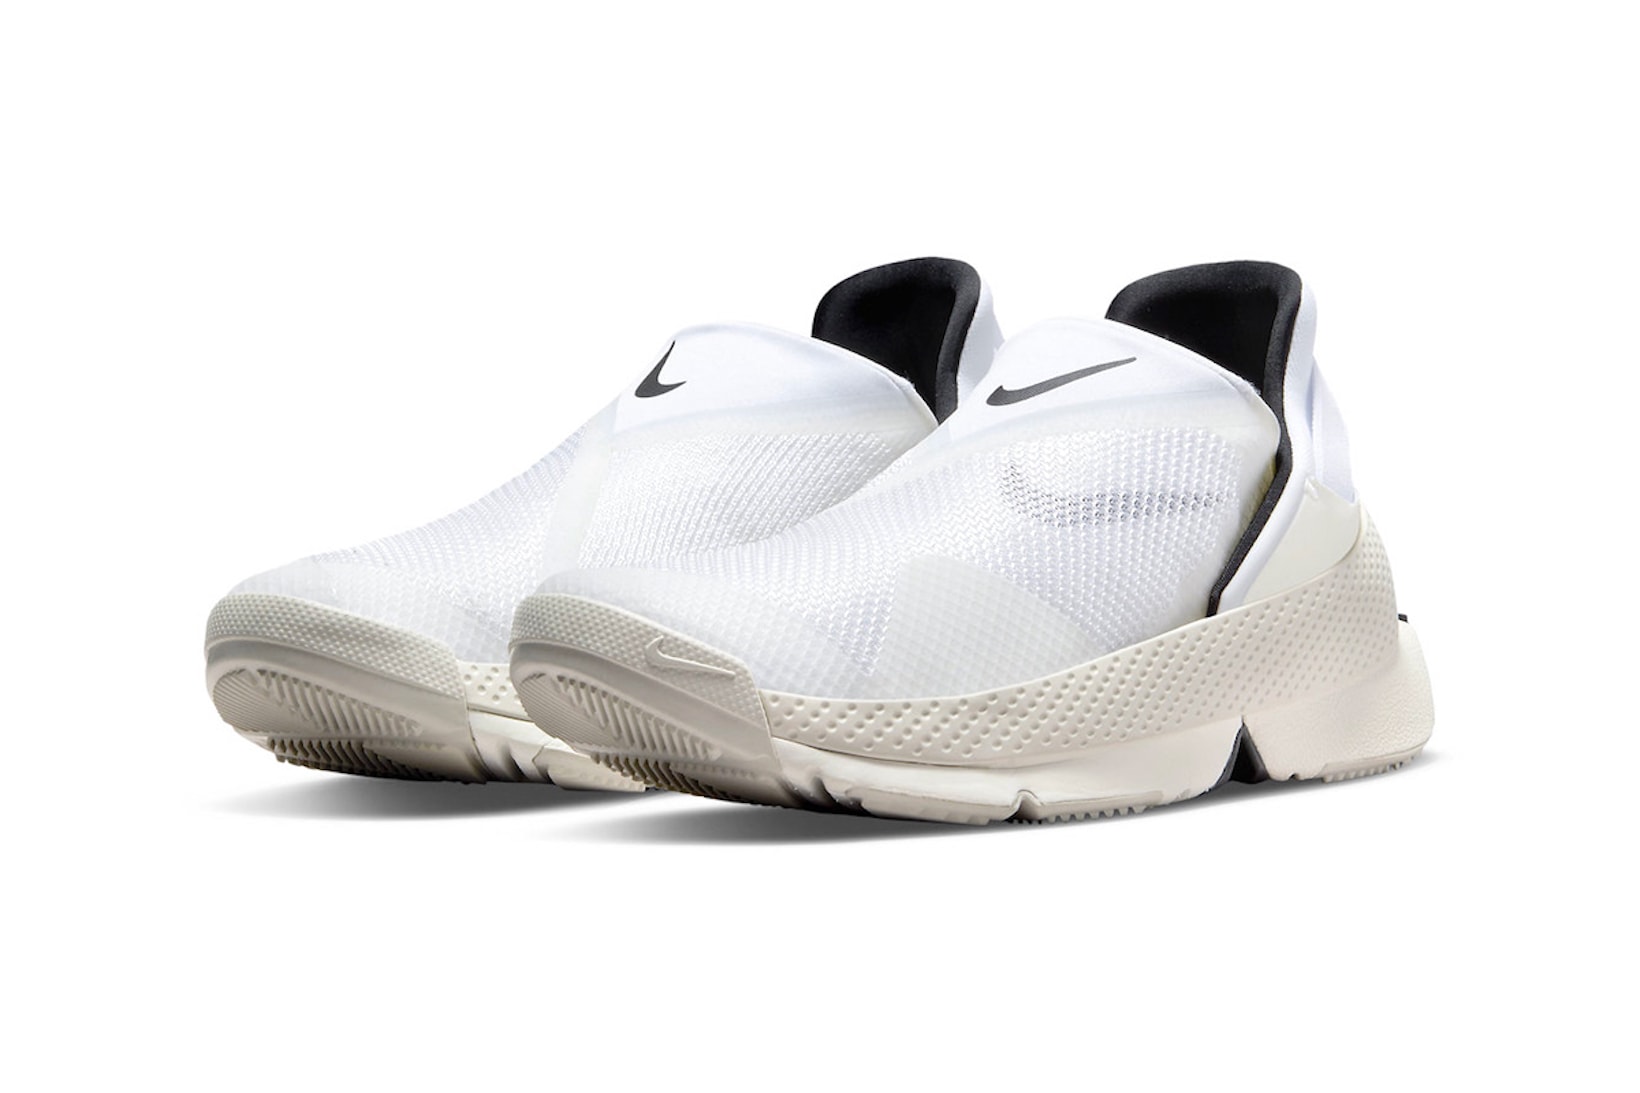 Nike GO FlyEase White Sail Sneakers Footwear Kicks Shoes